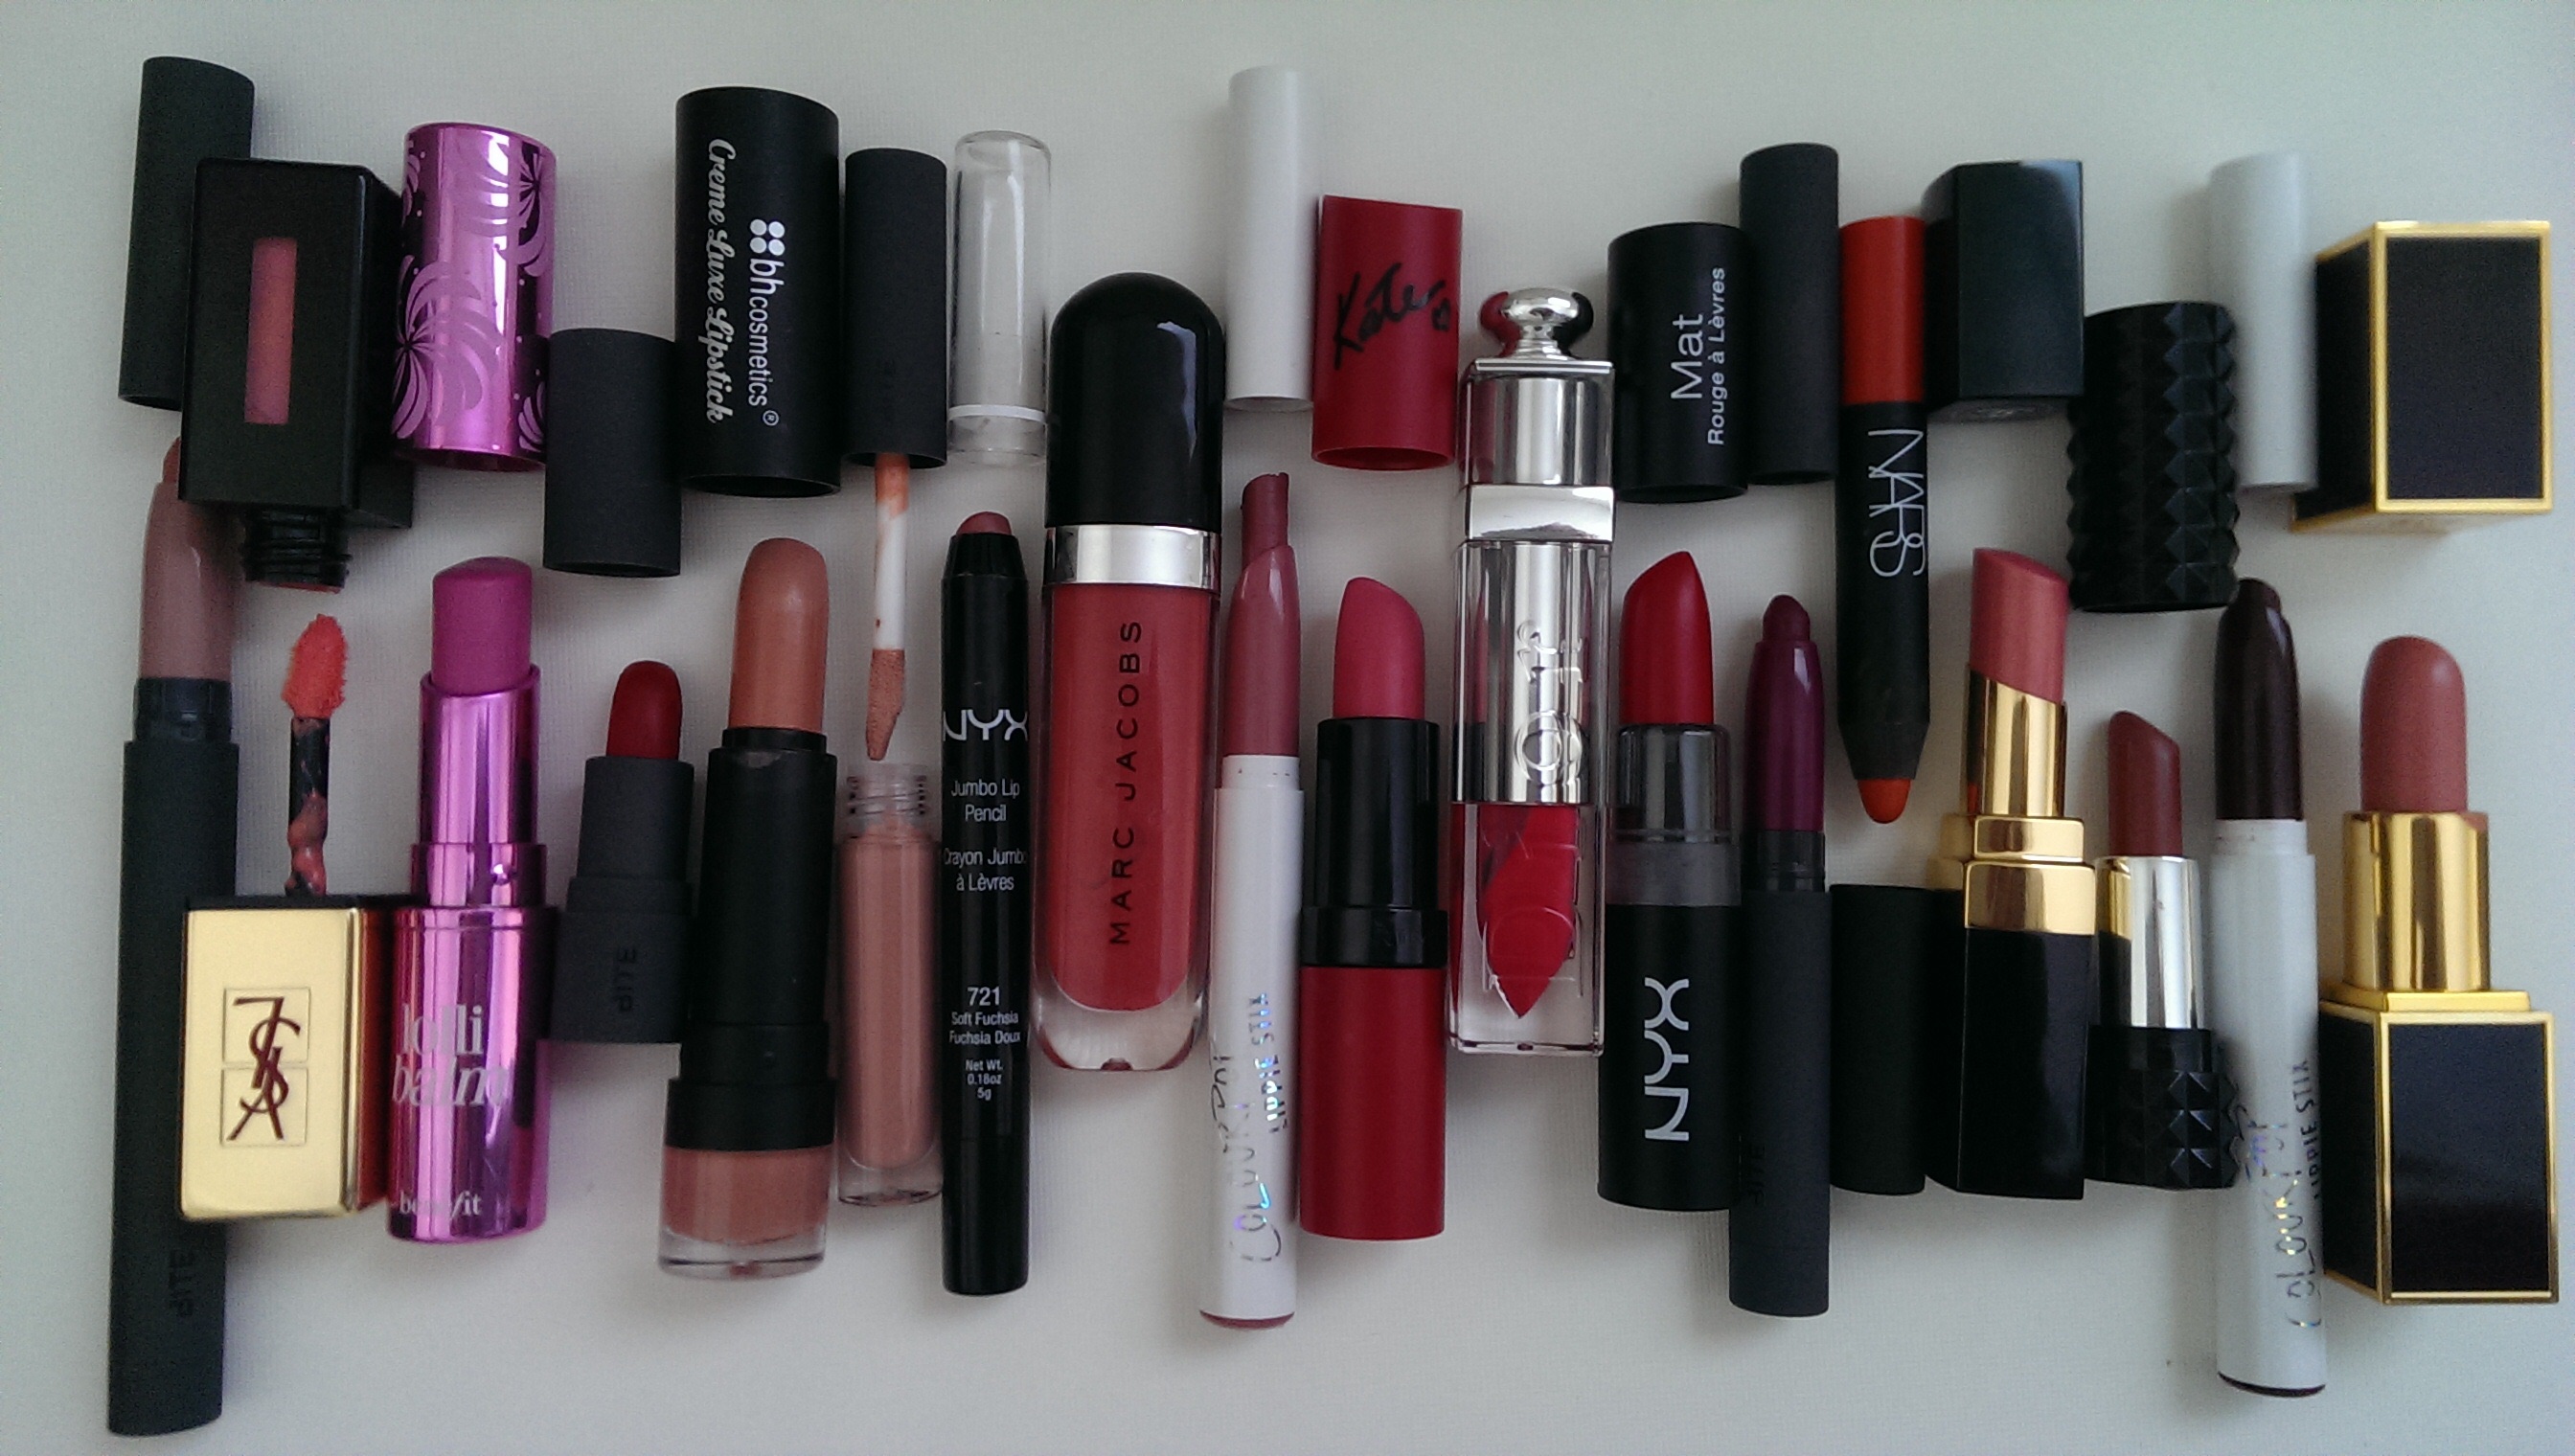 Re: 30 day lipstick challenge - Page 167 - Beauty Insider Community